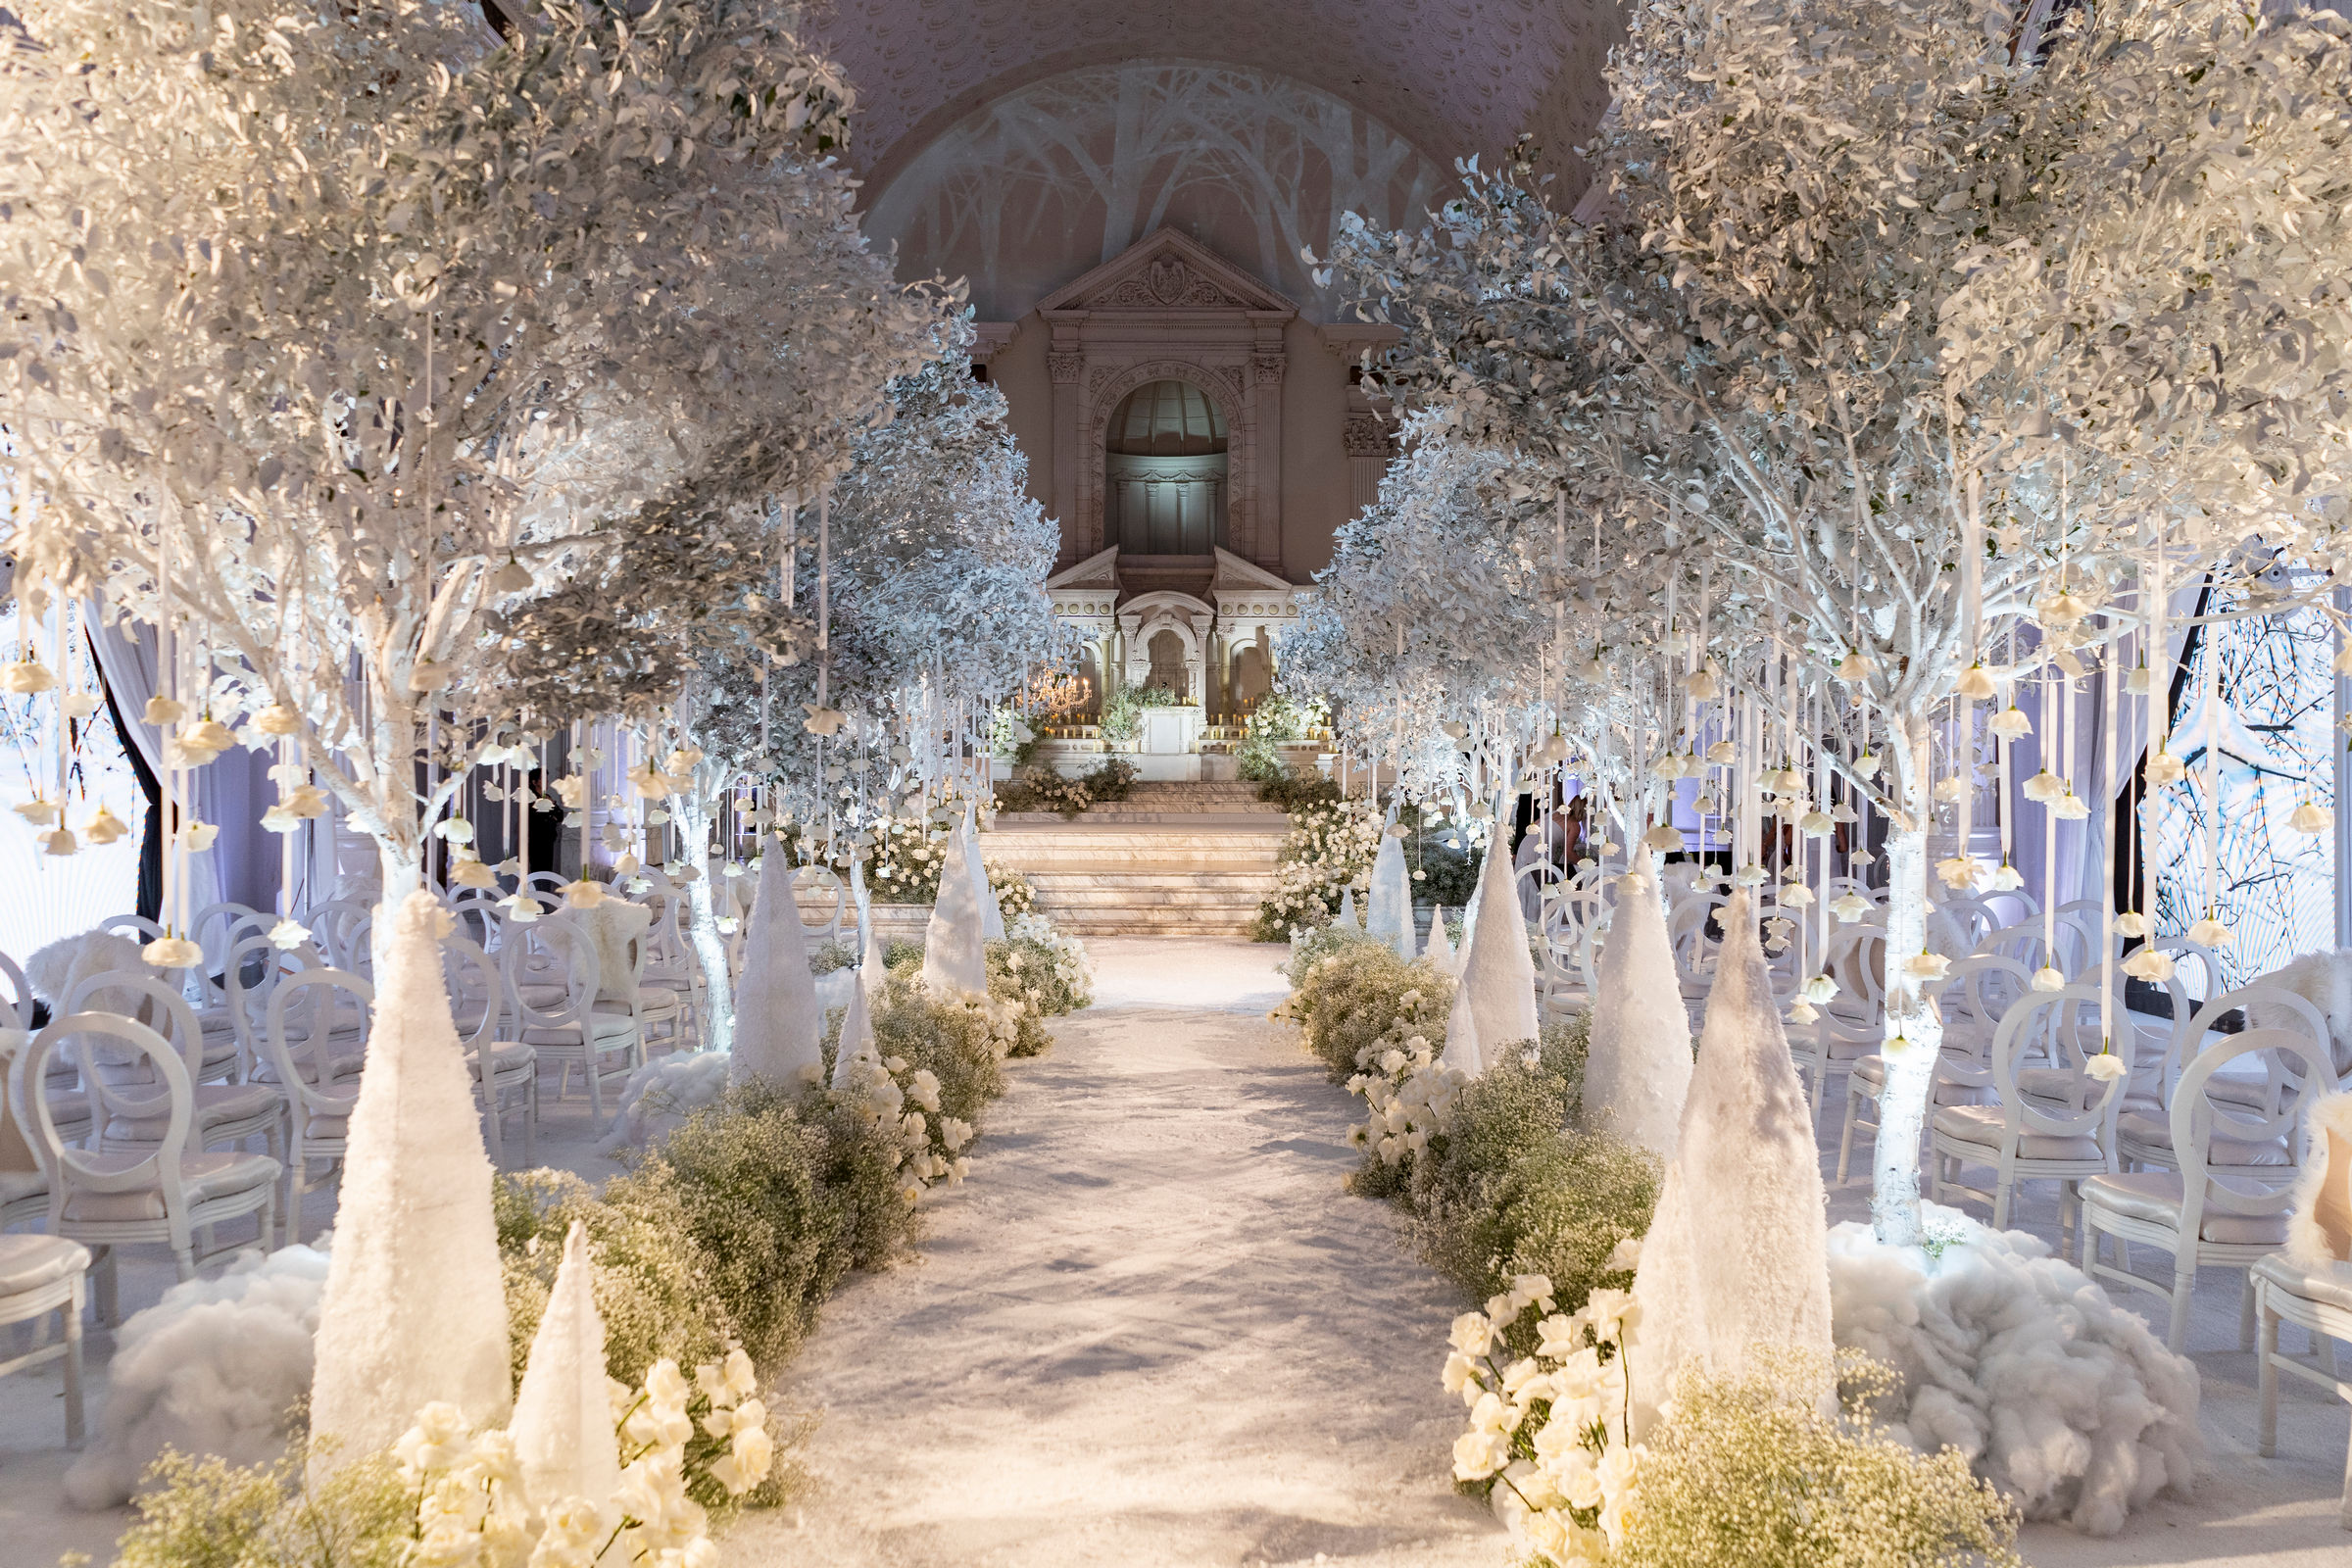 Selling Sunset’s Christine Quinn's Gothic Winter Wonderland Wedding